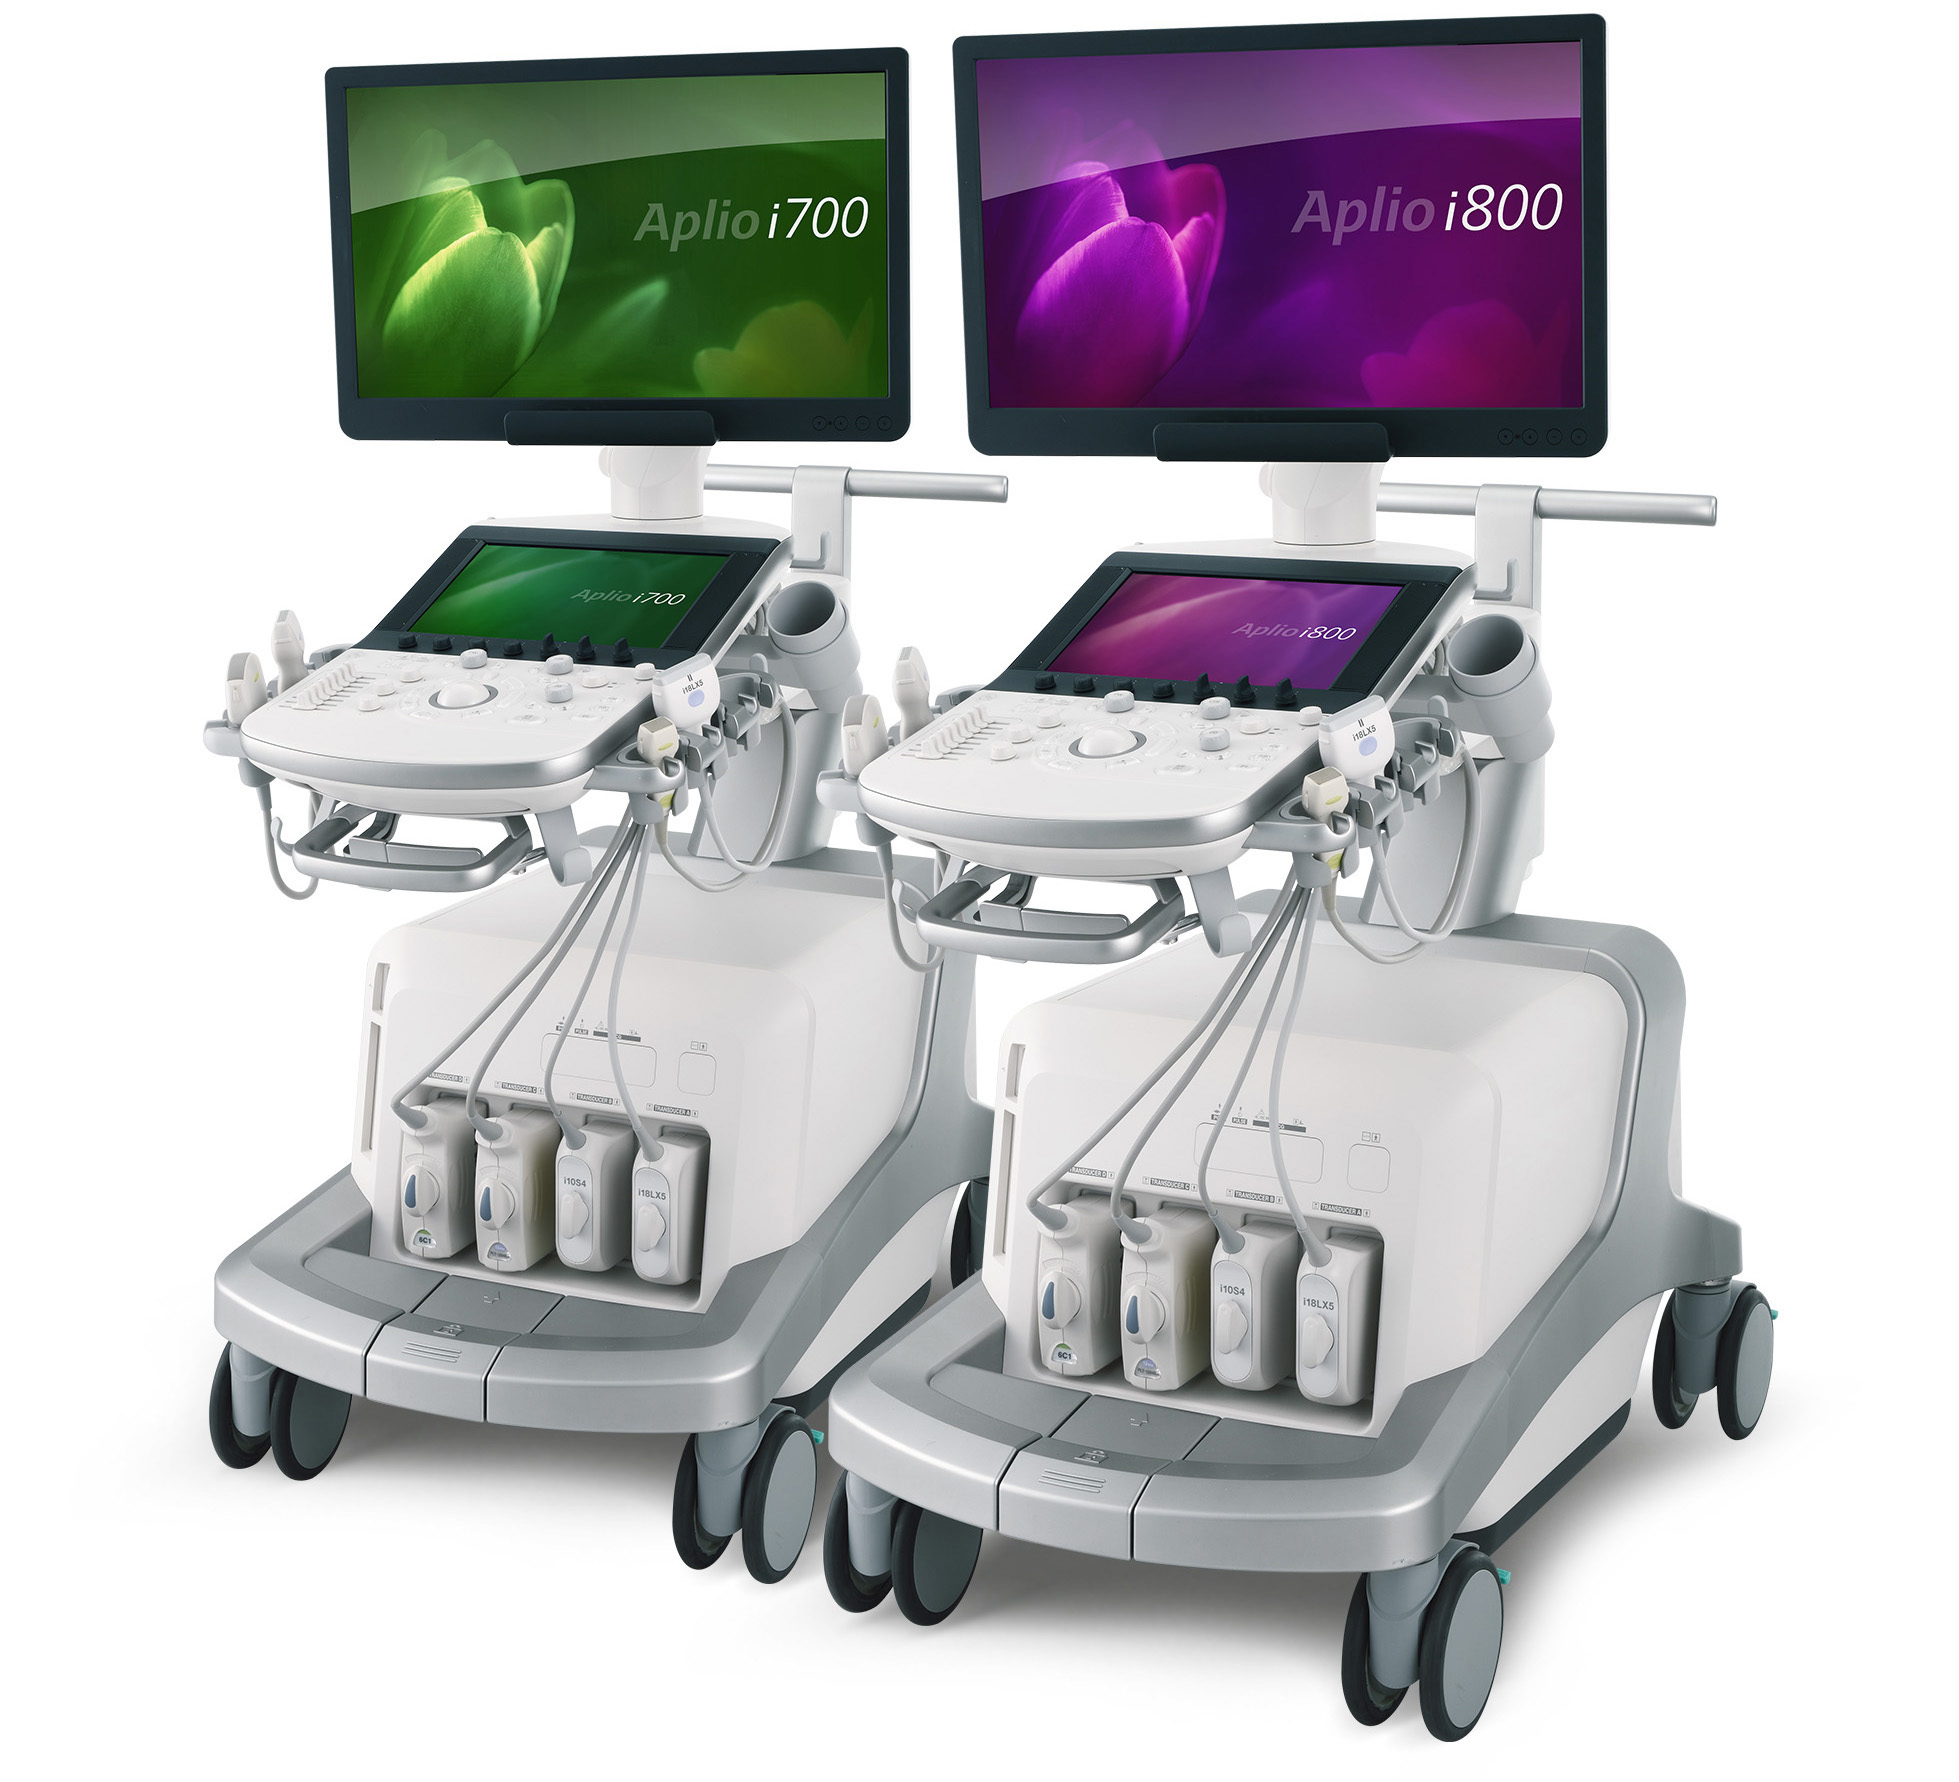 Ultrasound Aplio i-Series Machines